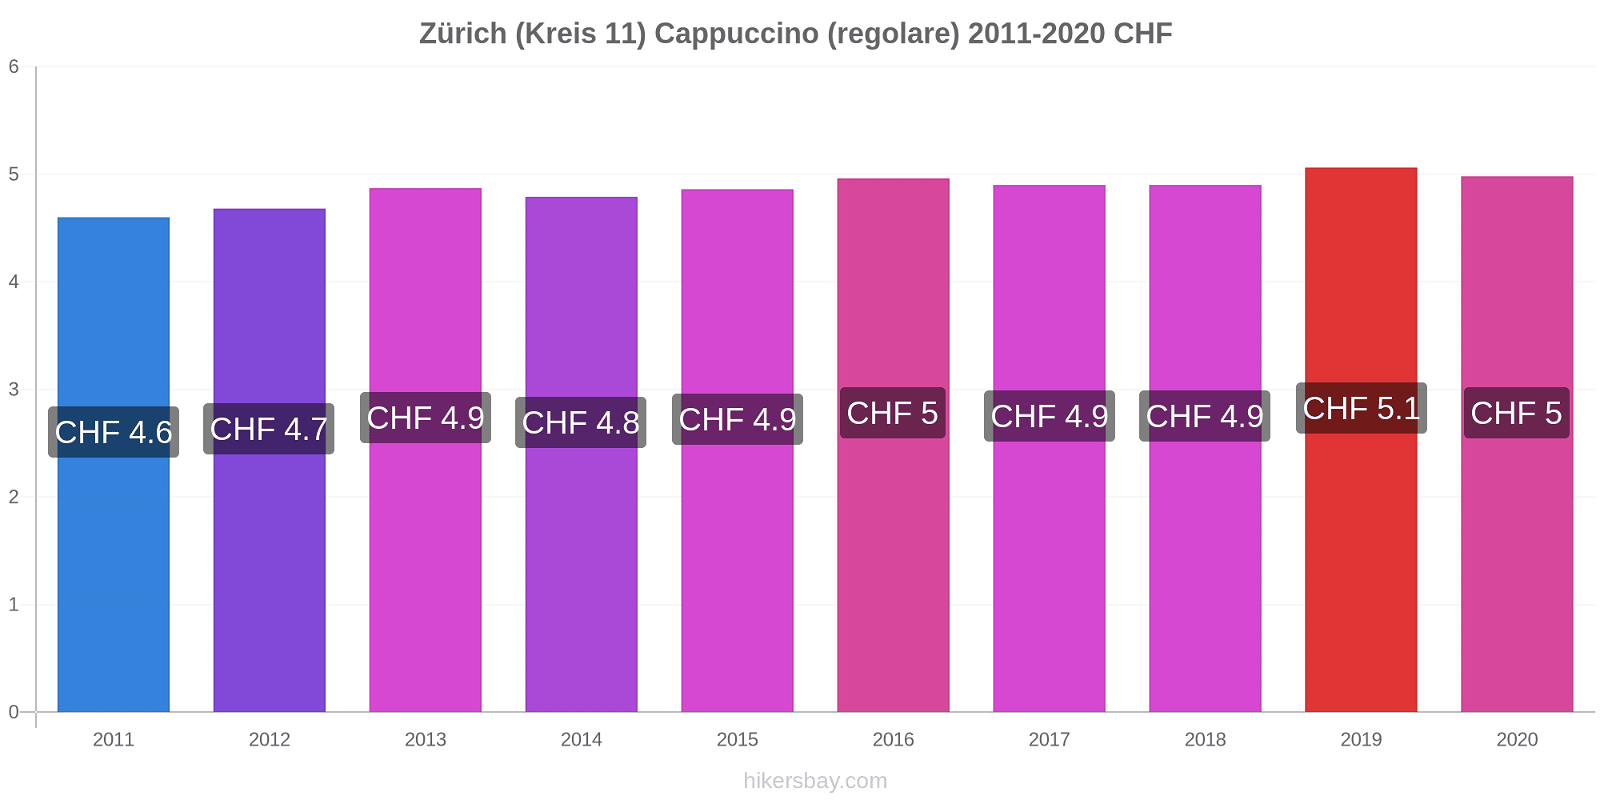 Zürich (Kreis 11) variazioni di prezzo Cappuccino (normale) hikersbay.com